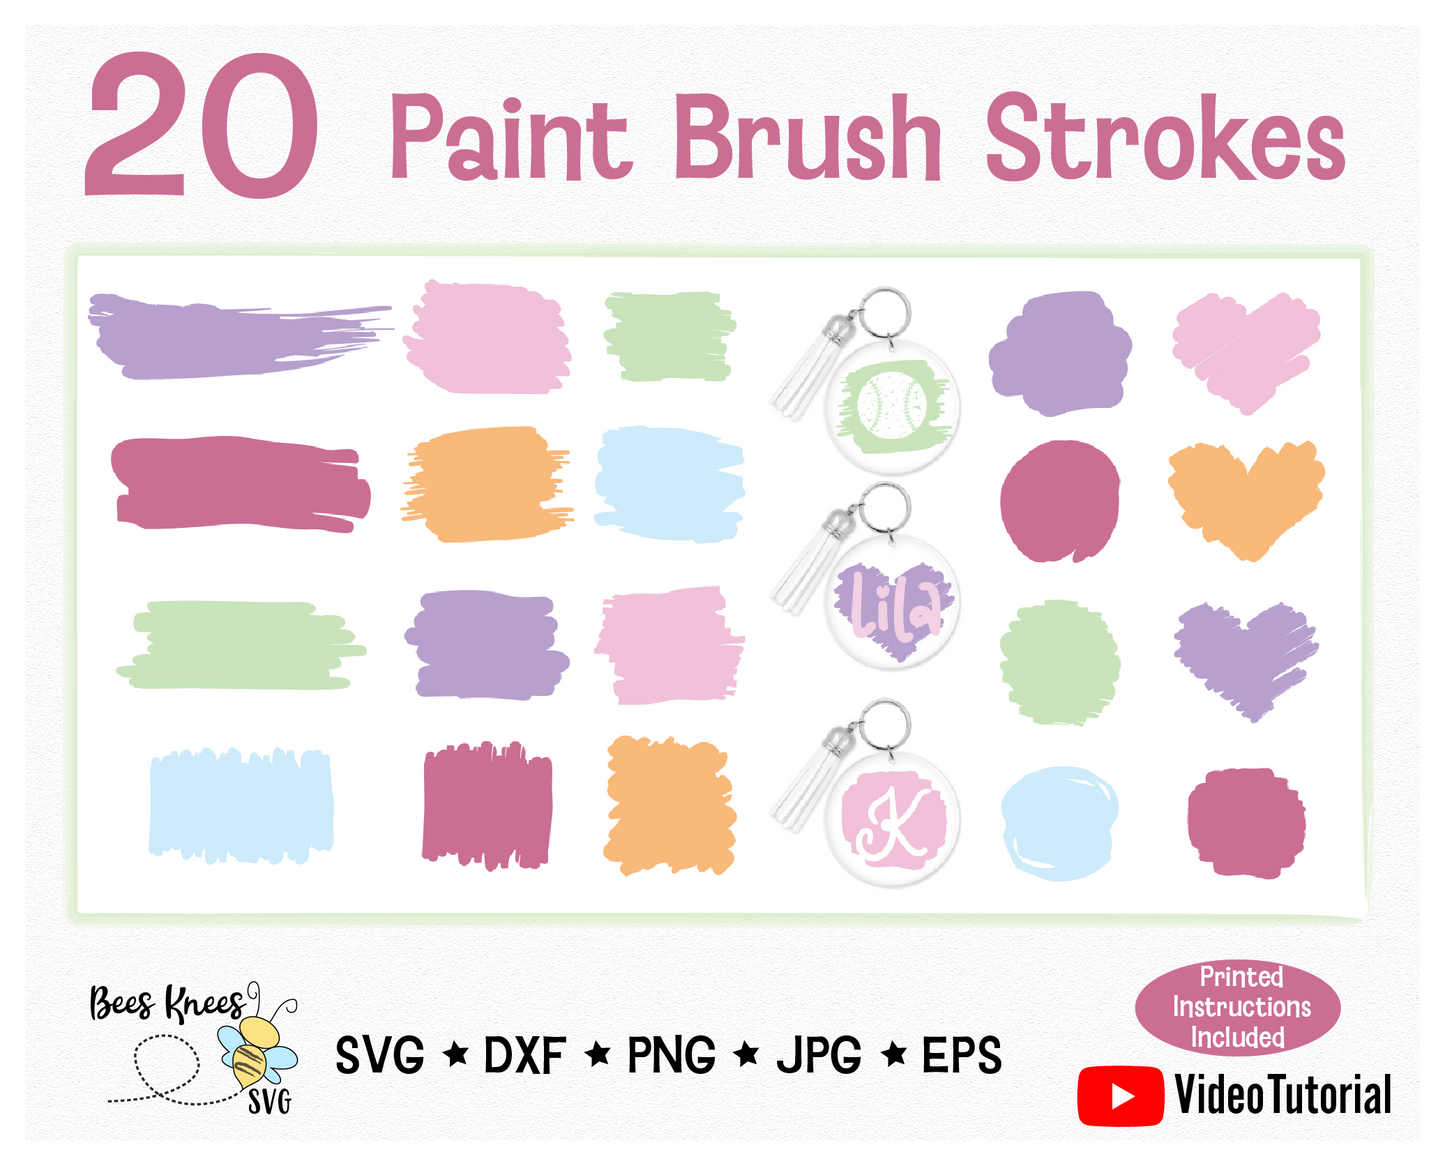 Keychain Paint Brush Strokes SVG